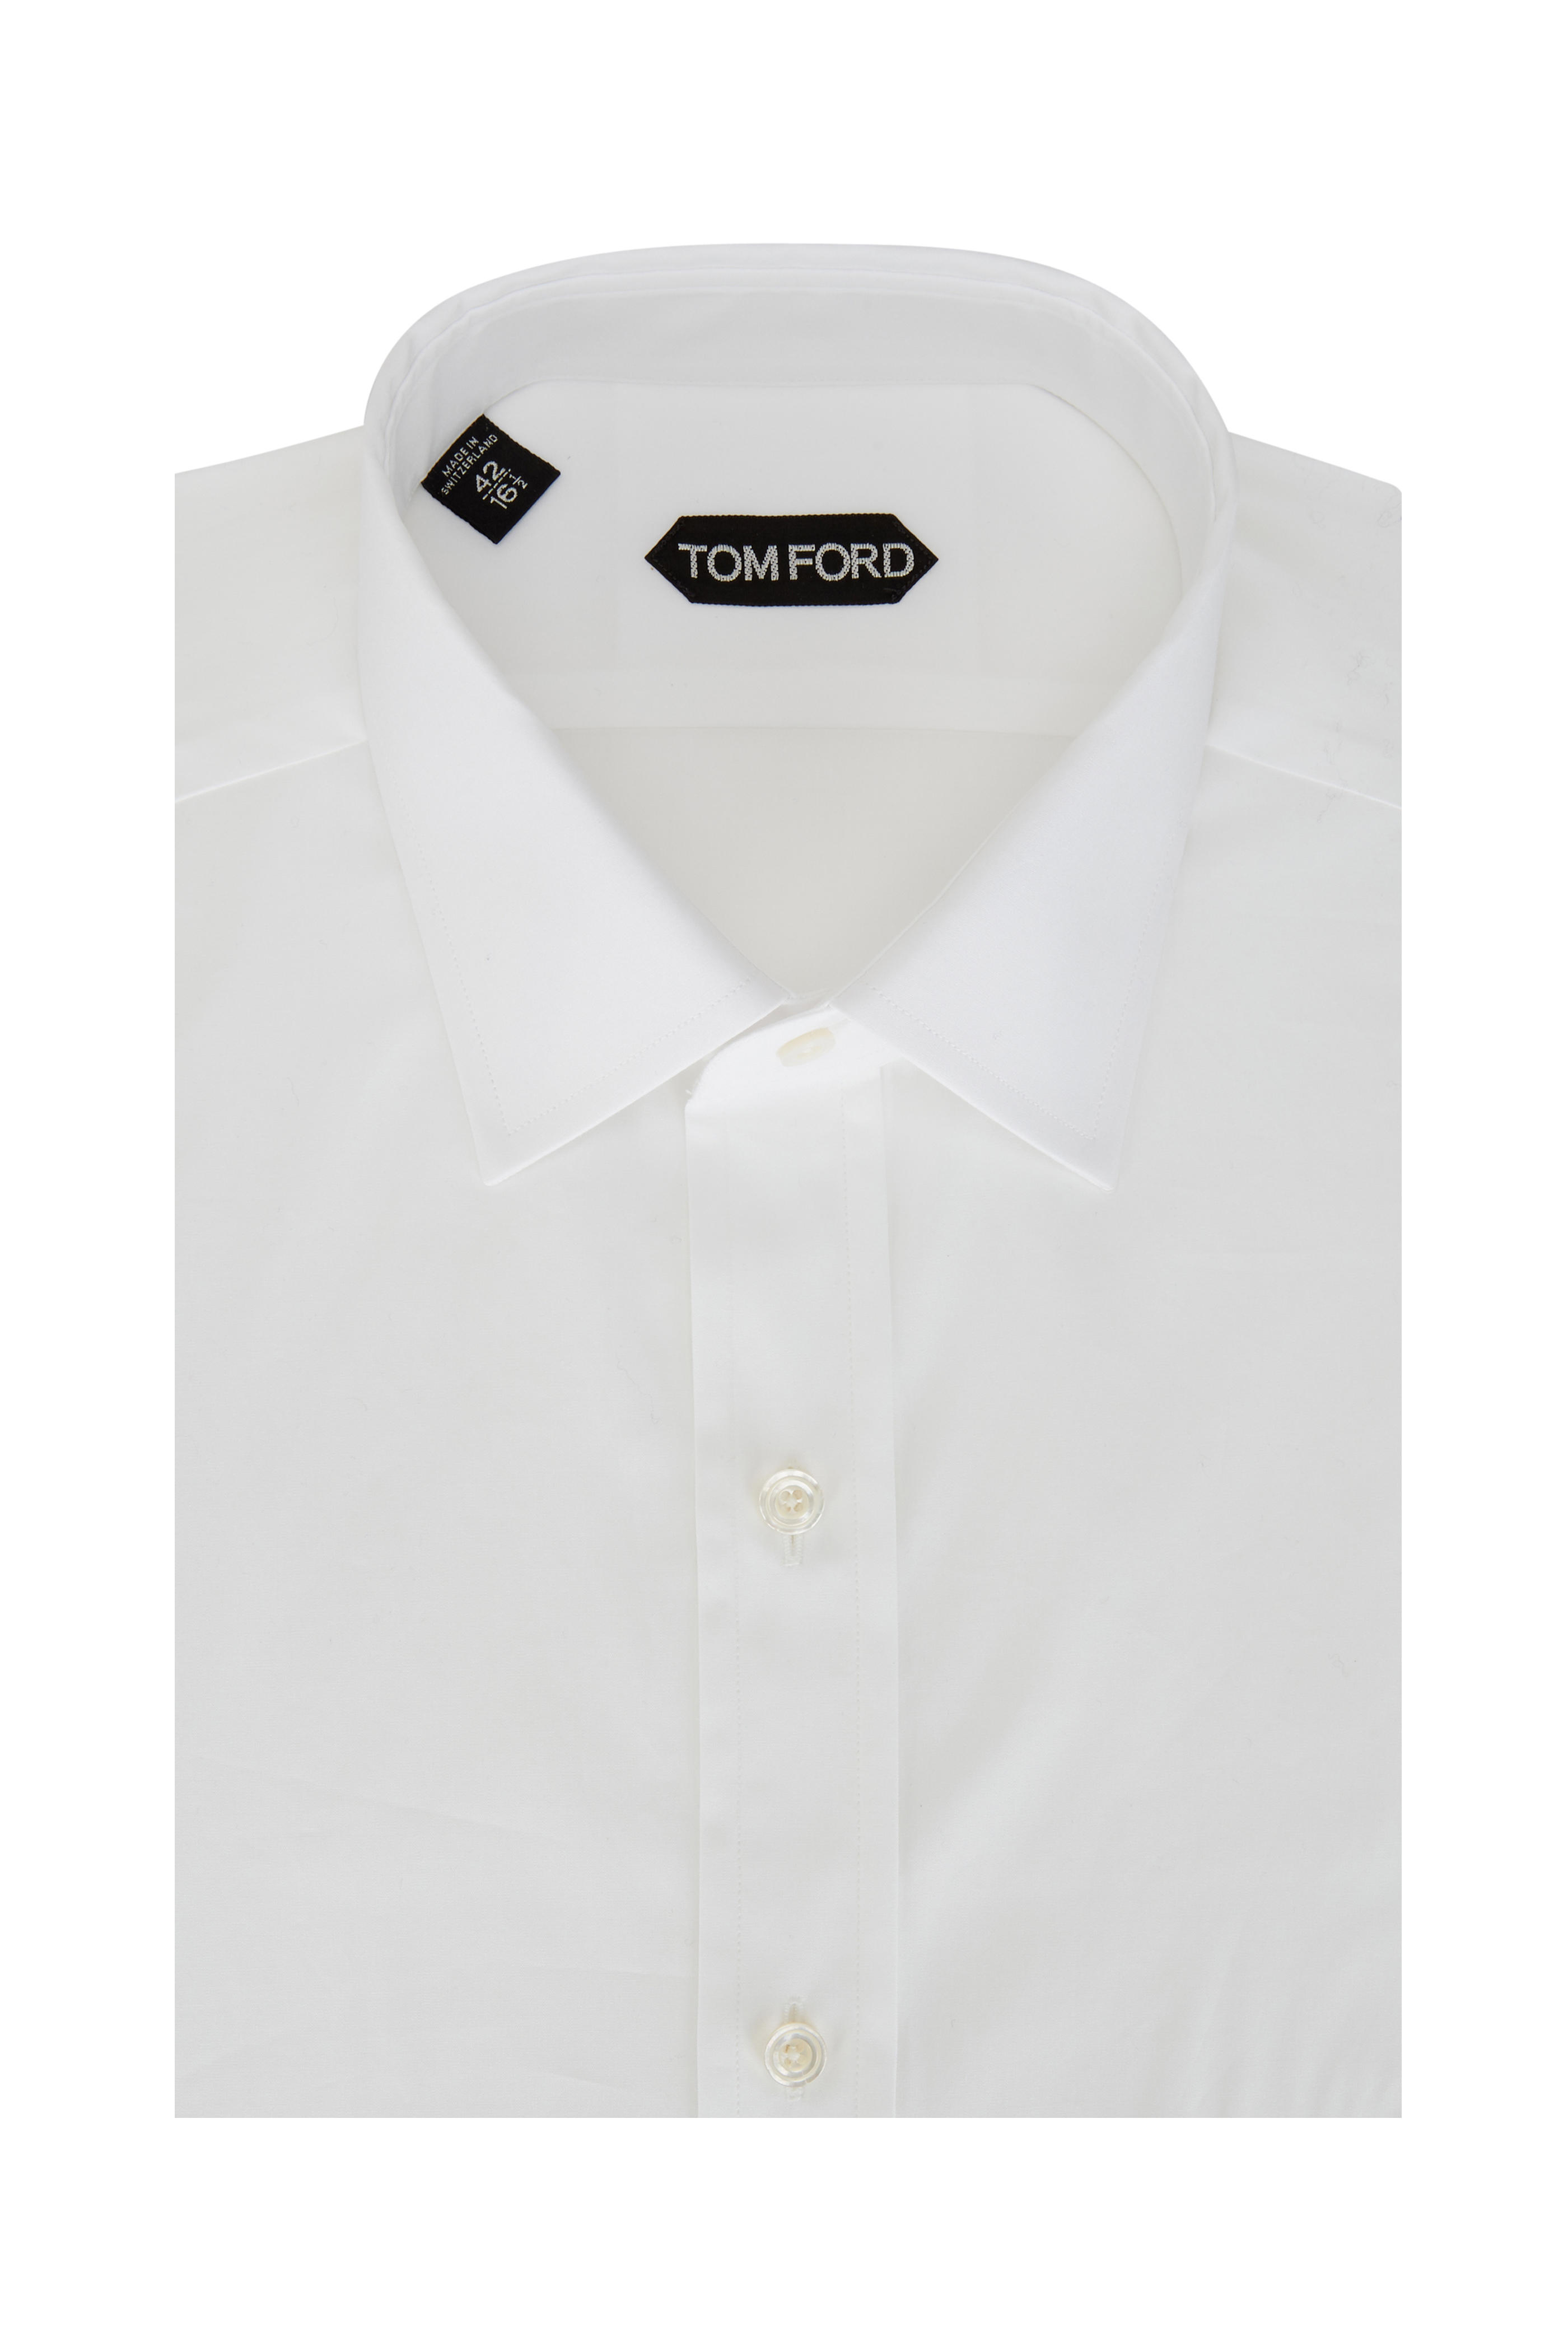 Tom Ford - Solid White Dress Shirt ...